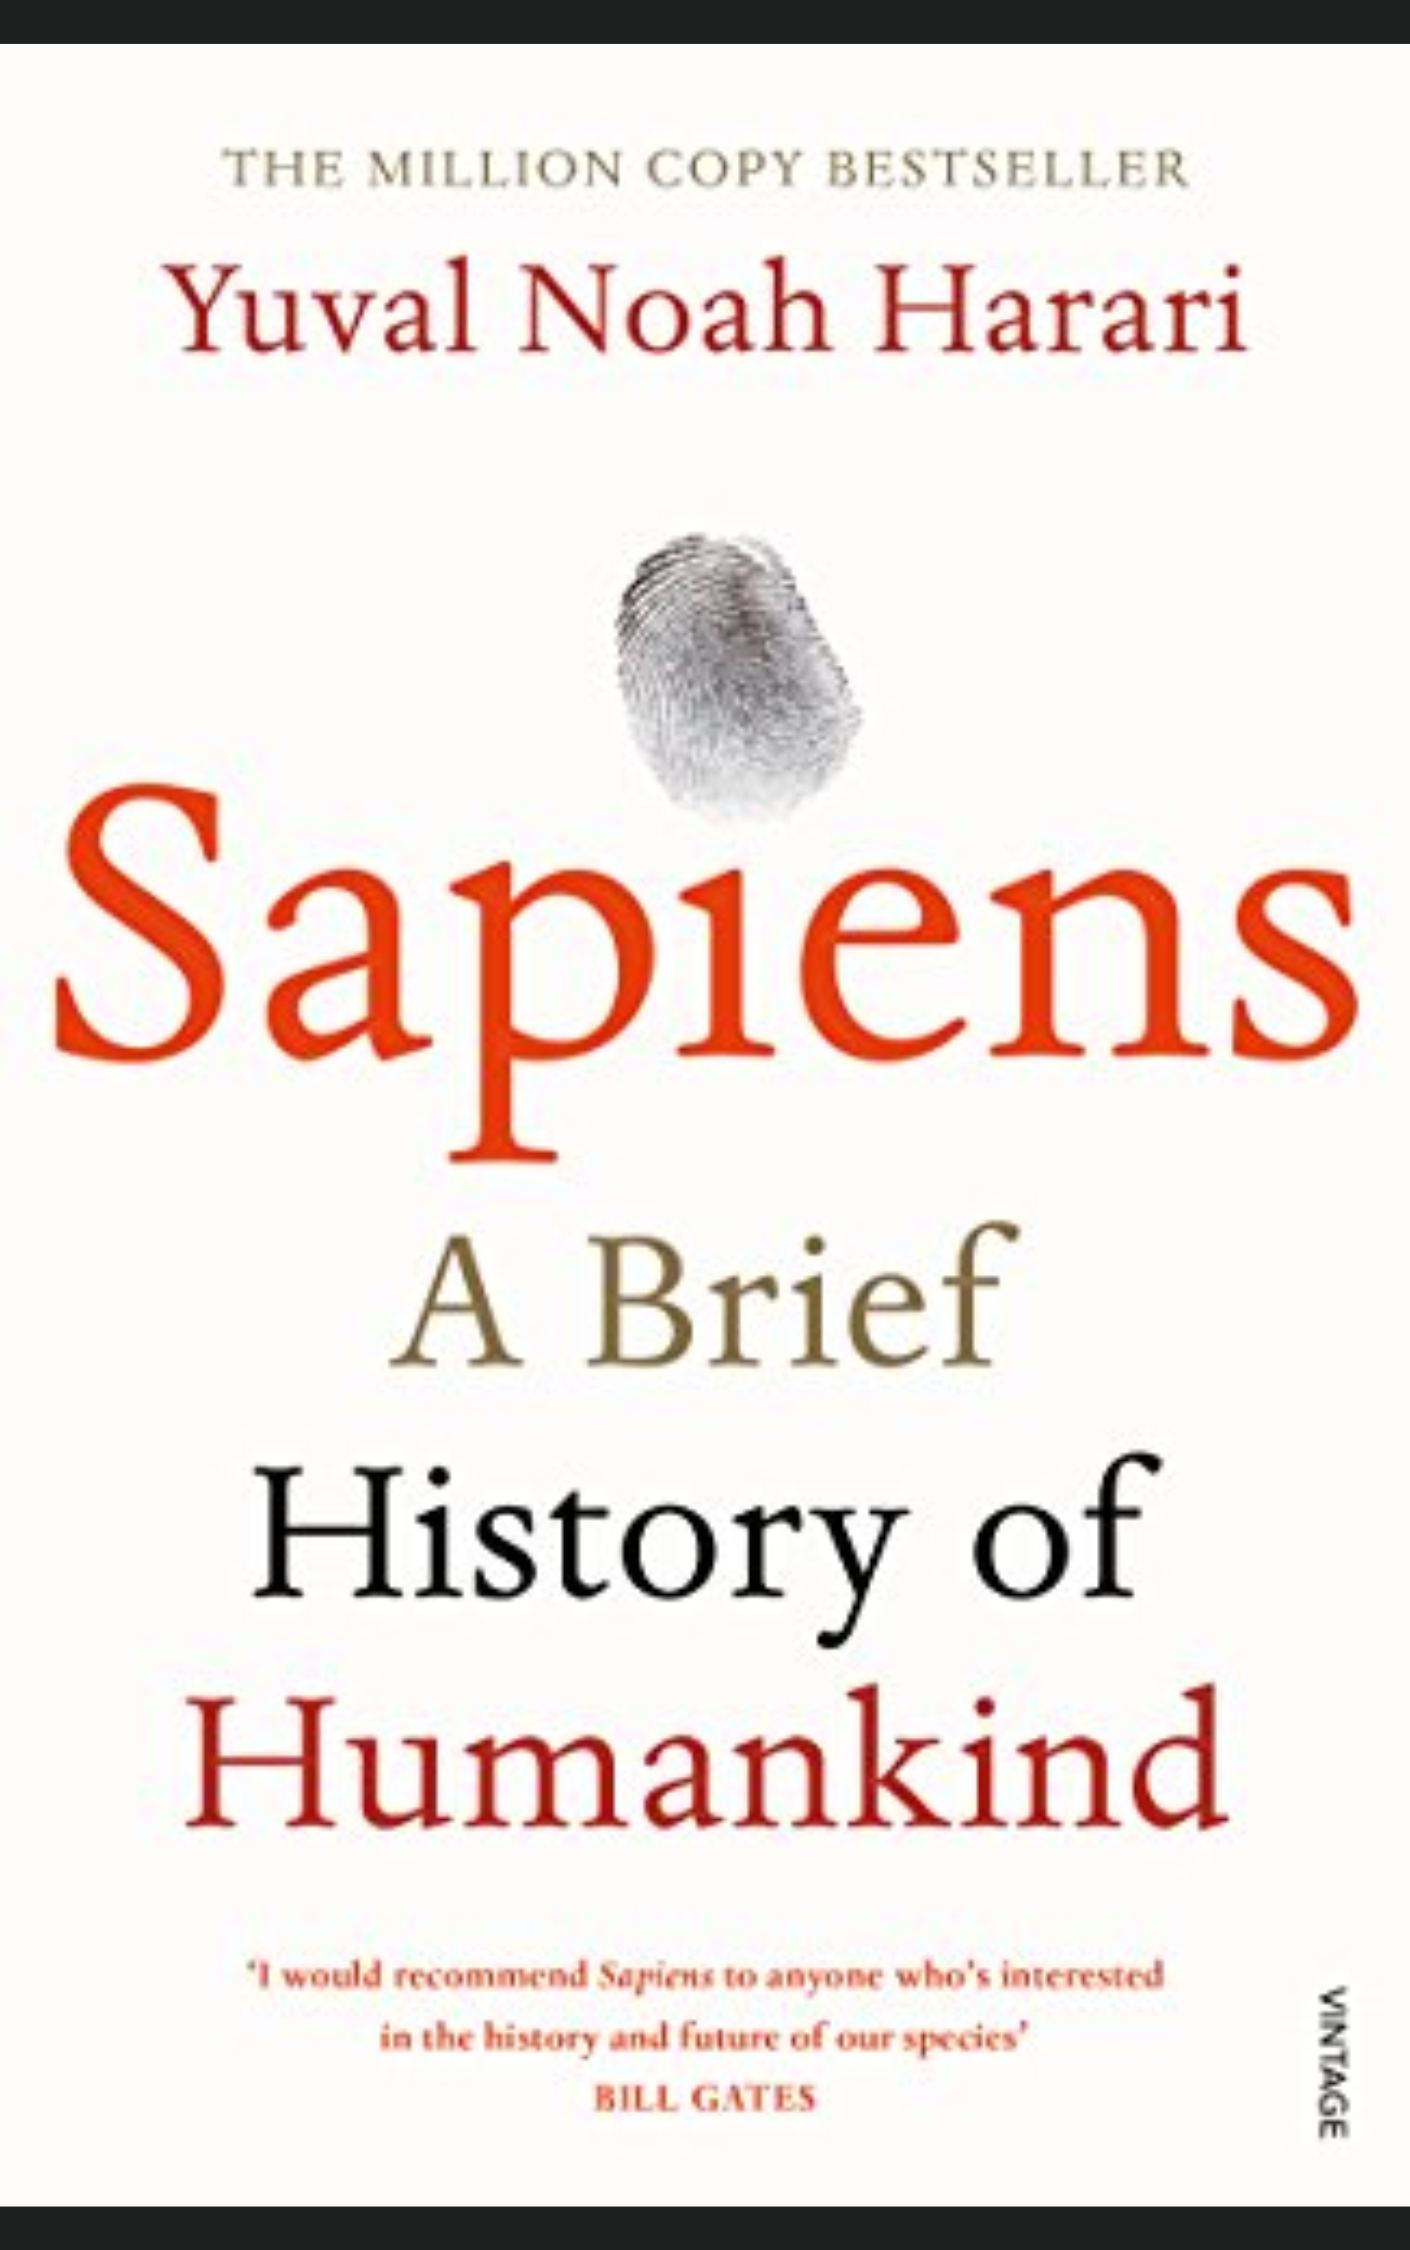 SAPIENS: A BRIEF HISTORY OF HUMANKIND by YUVAL NOAH HARARI